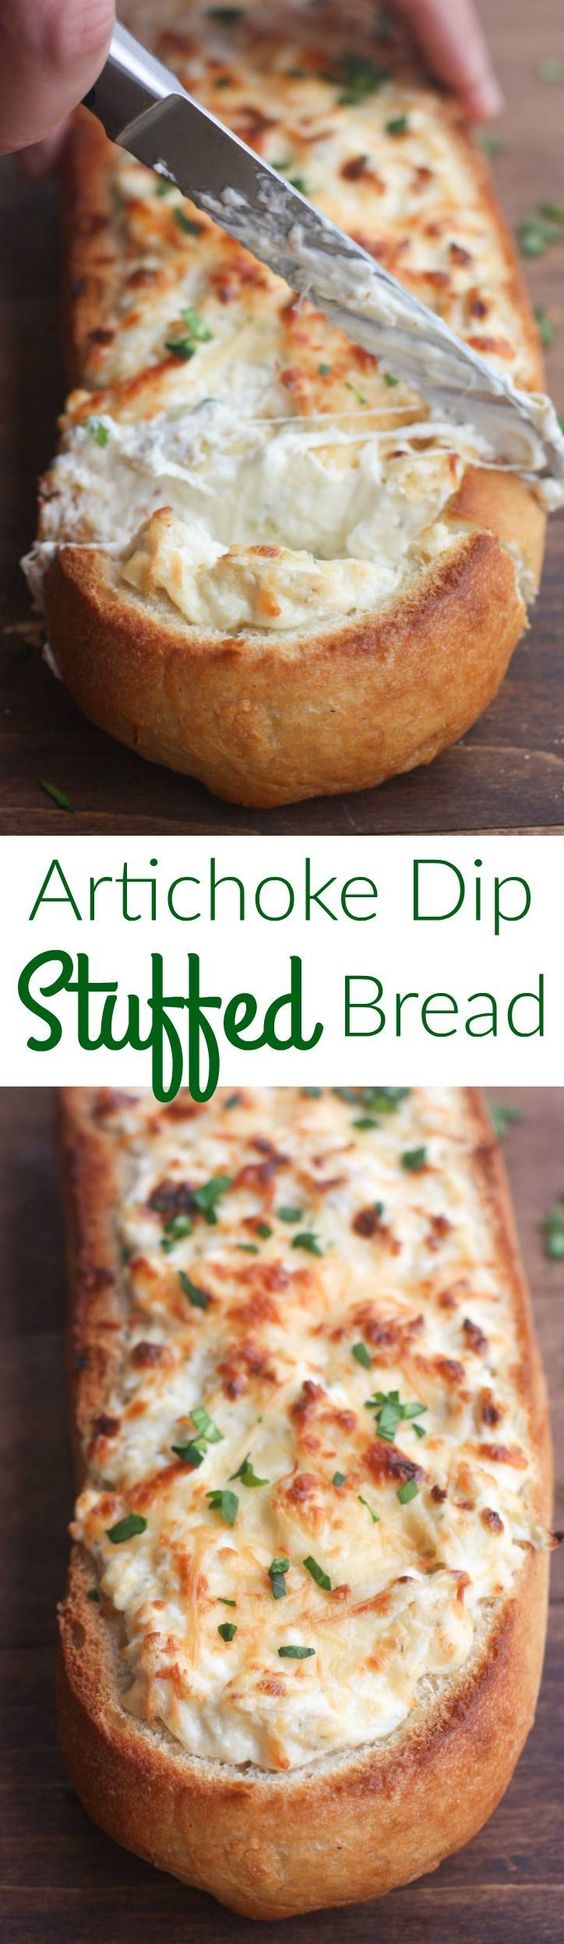 10 Homemade Stuffed Bread Recipes That Rock